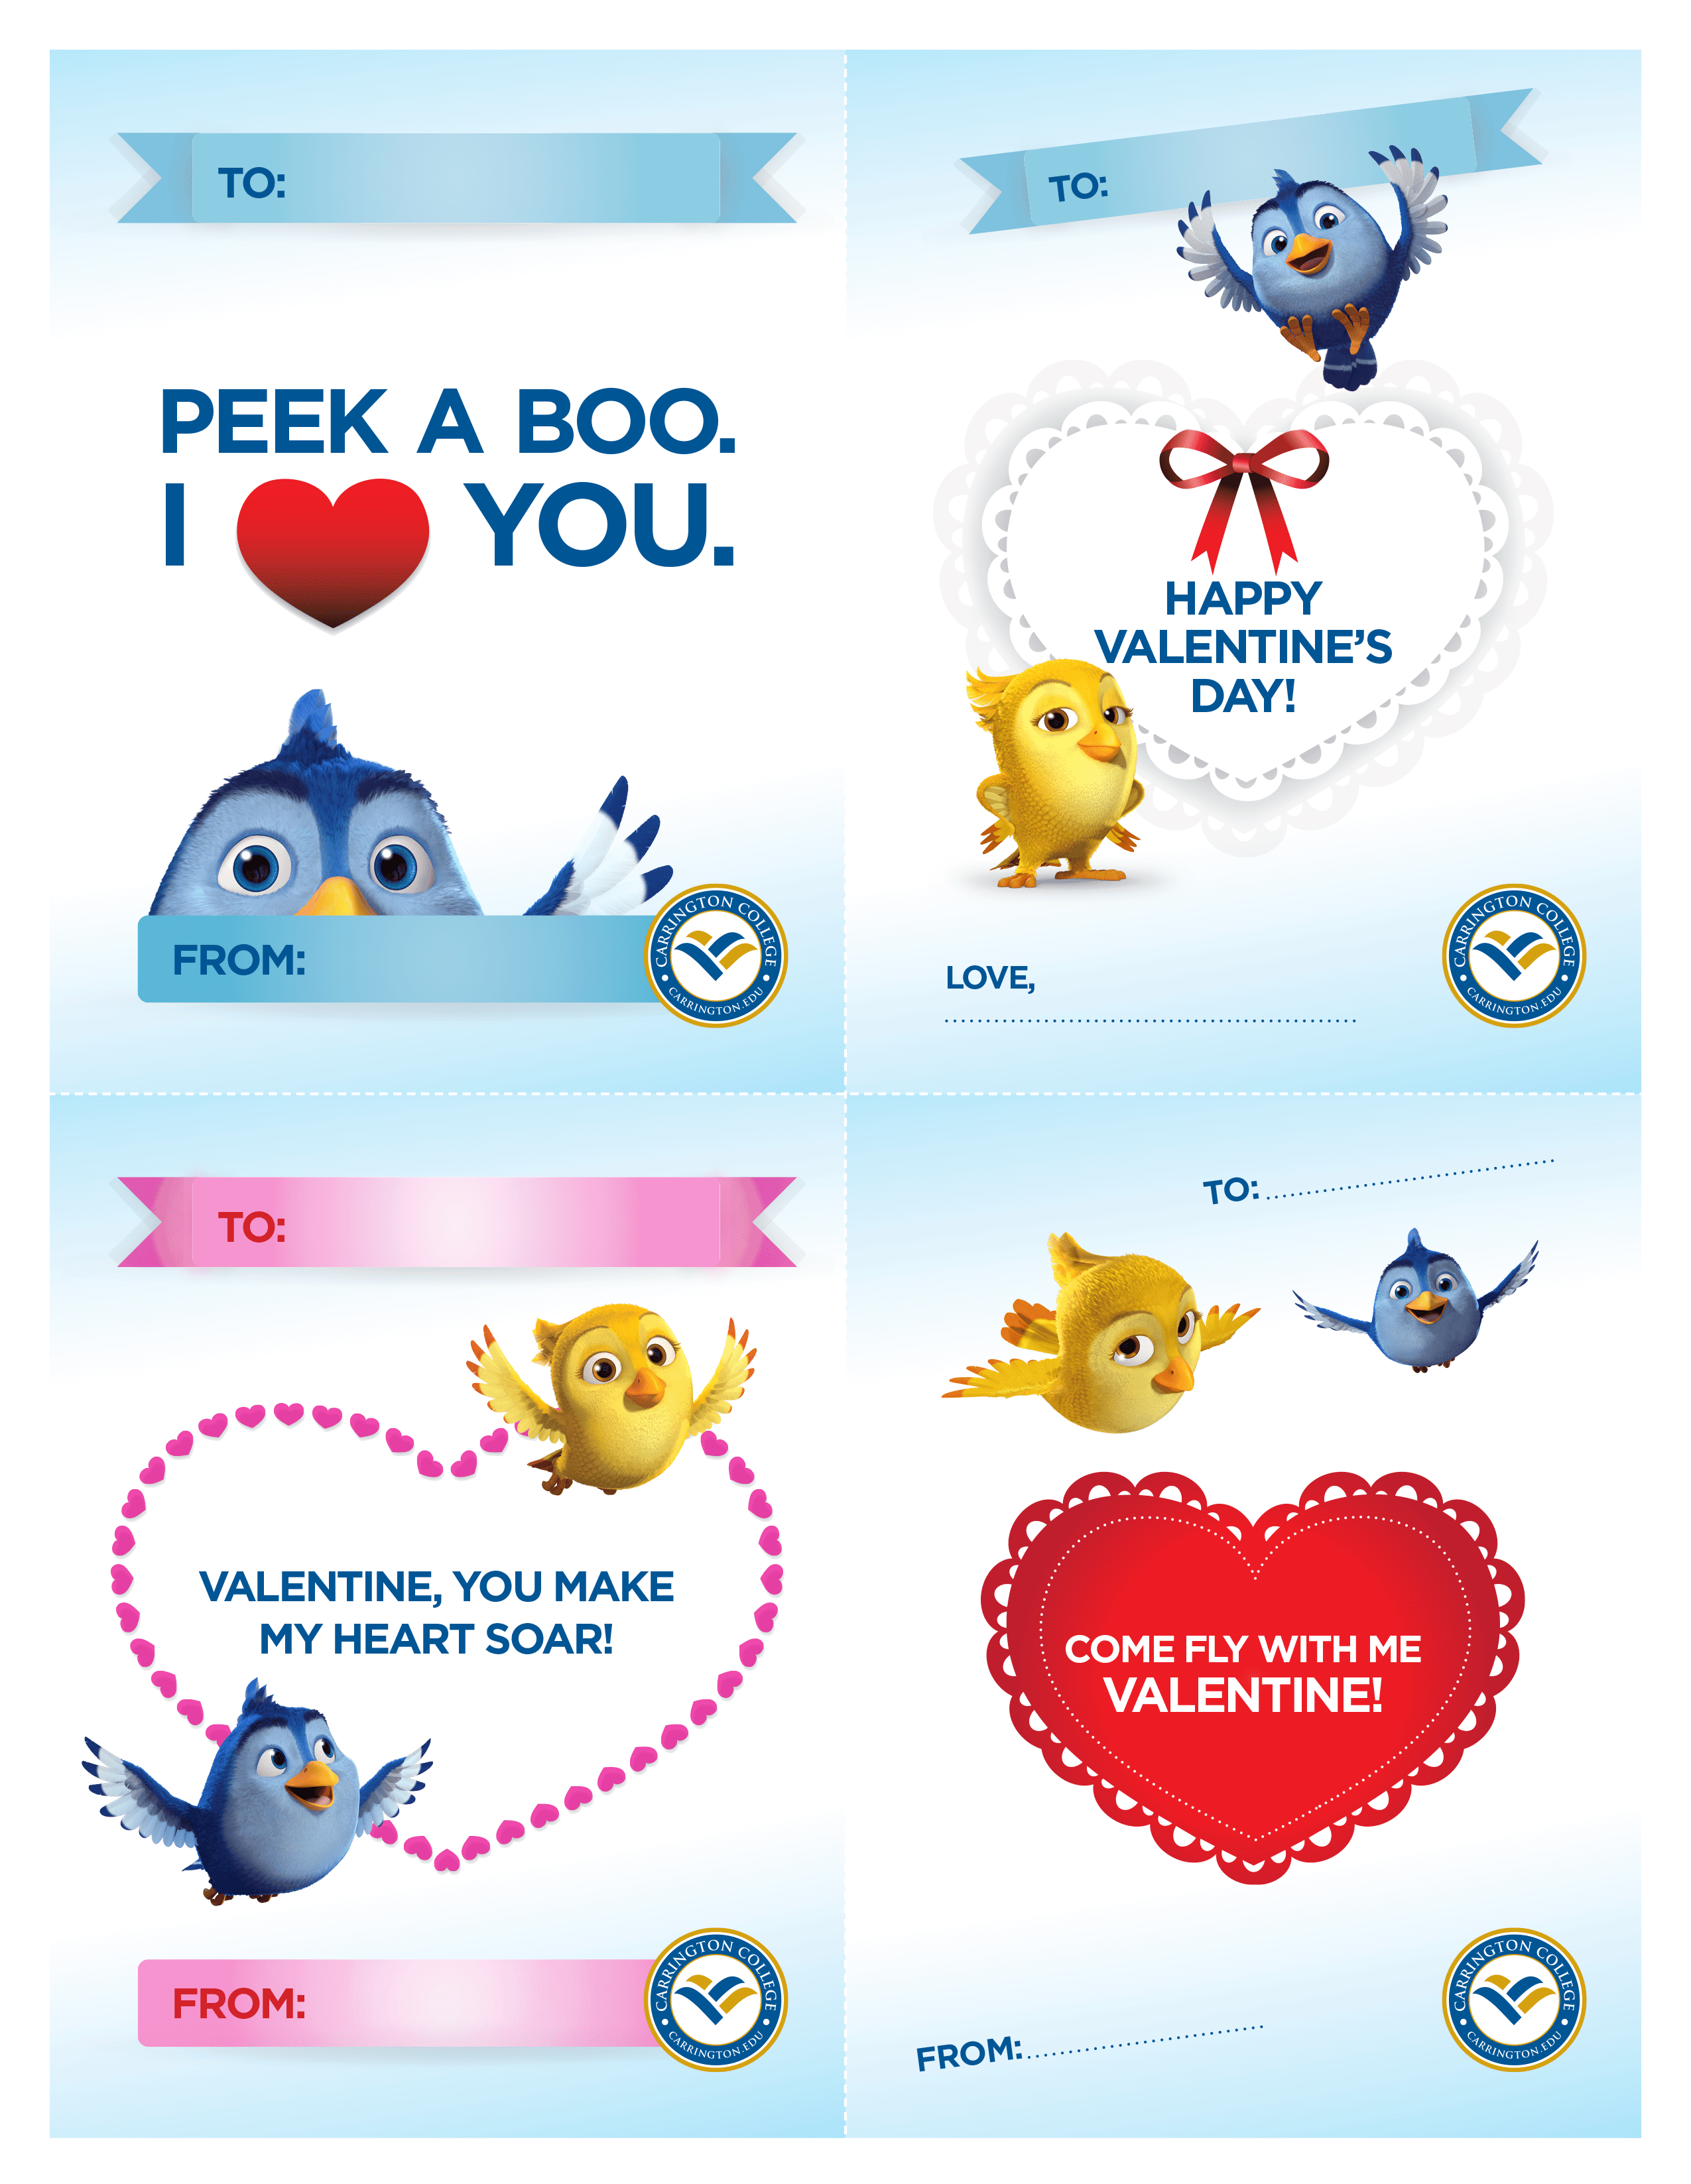 Valentines Day Pinterest Cards